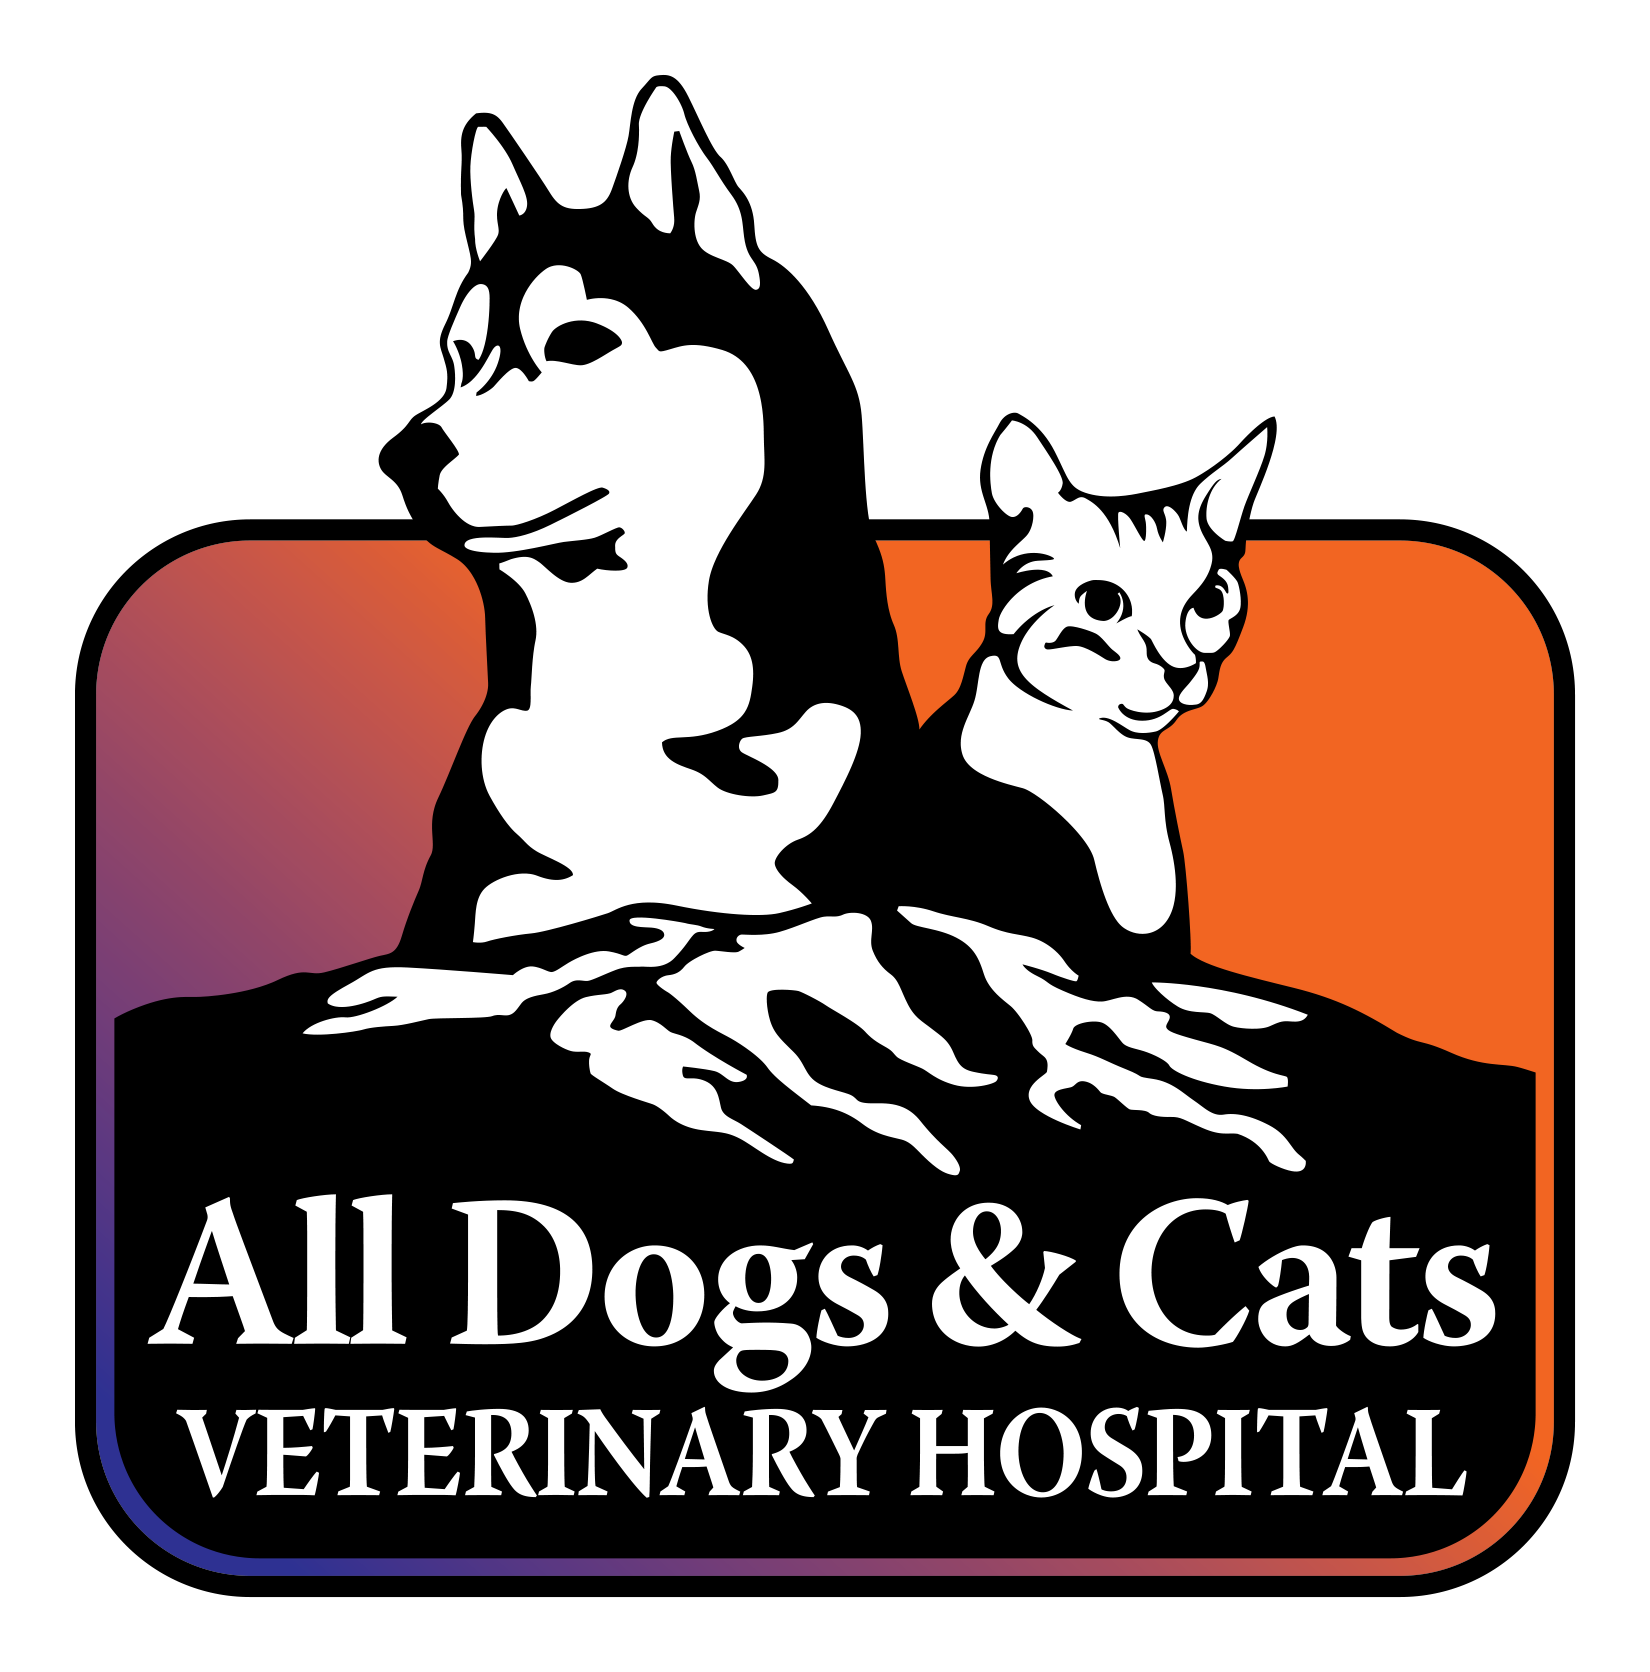 All Dogs & Cats Veterinary Hospital - Glenwood Springs